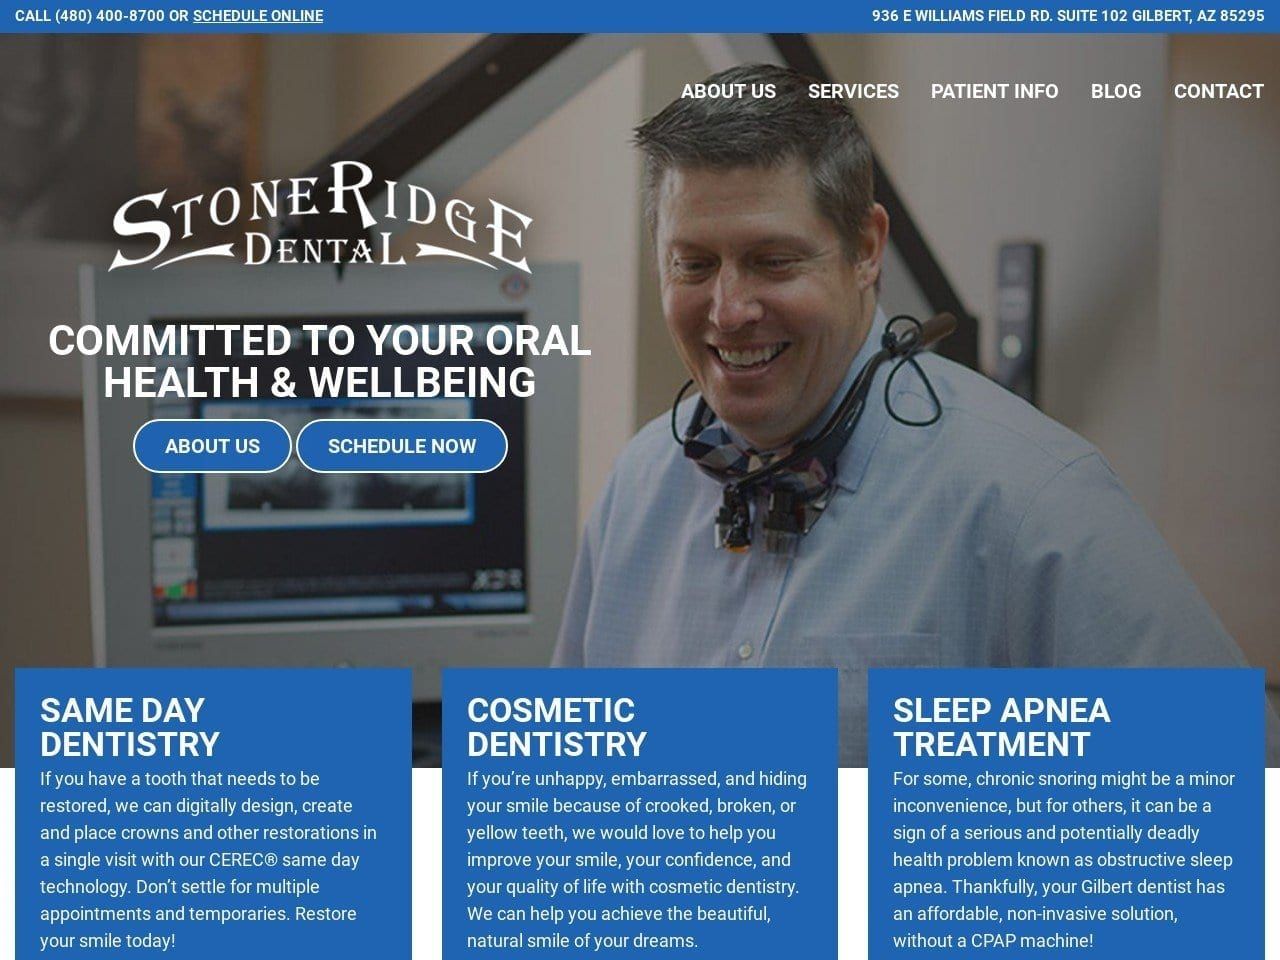 Stoneridge Dental Website Screenshot from dentist-gilbert.com